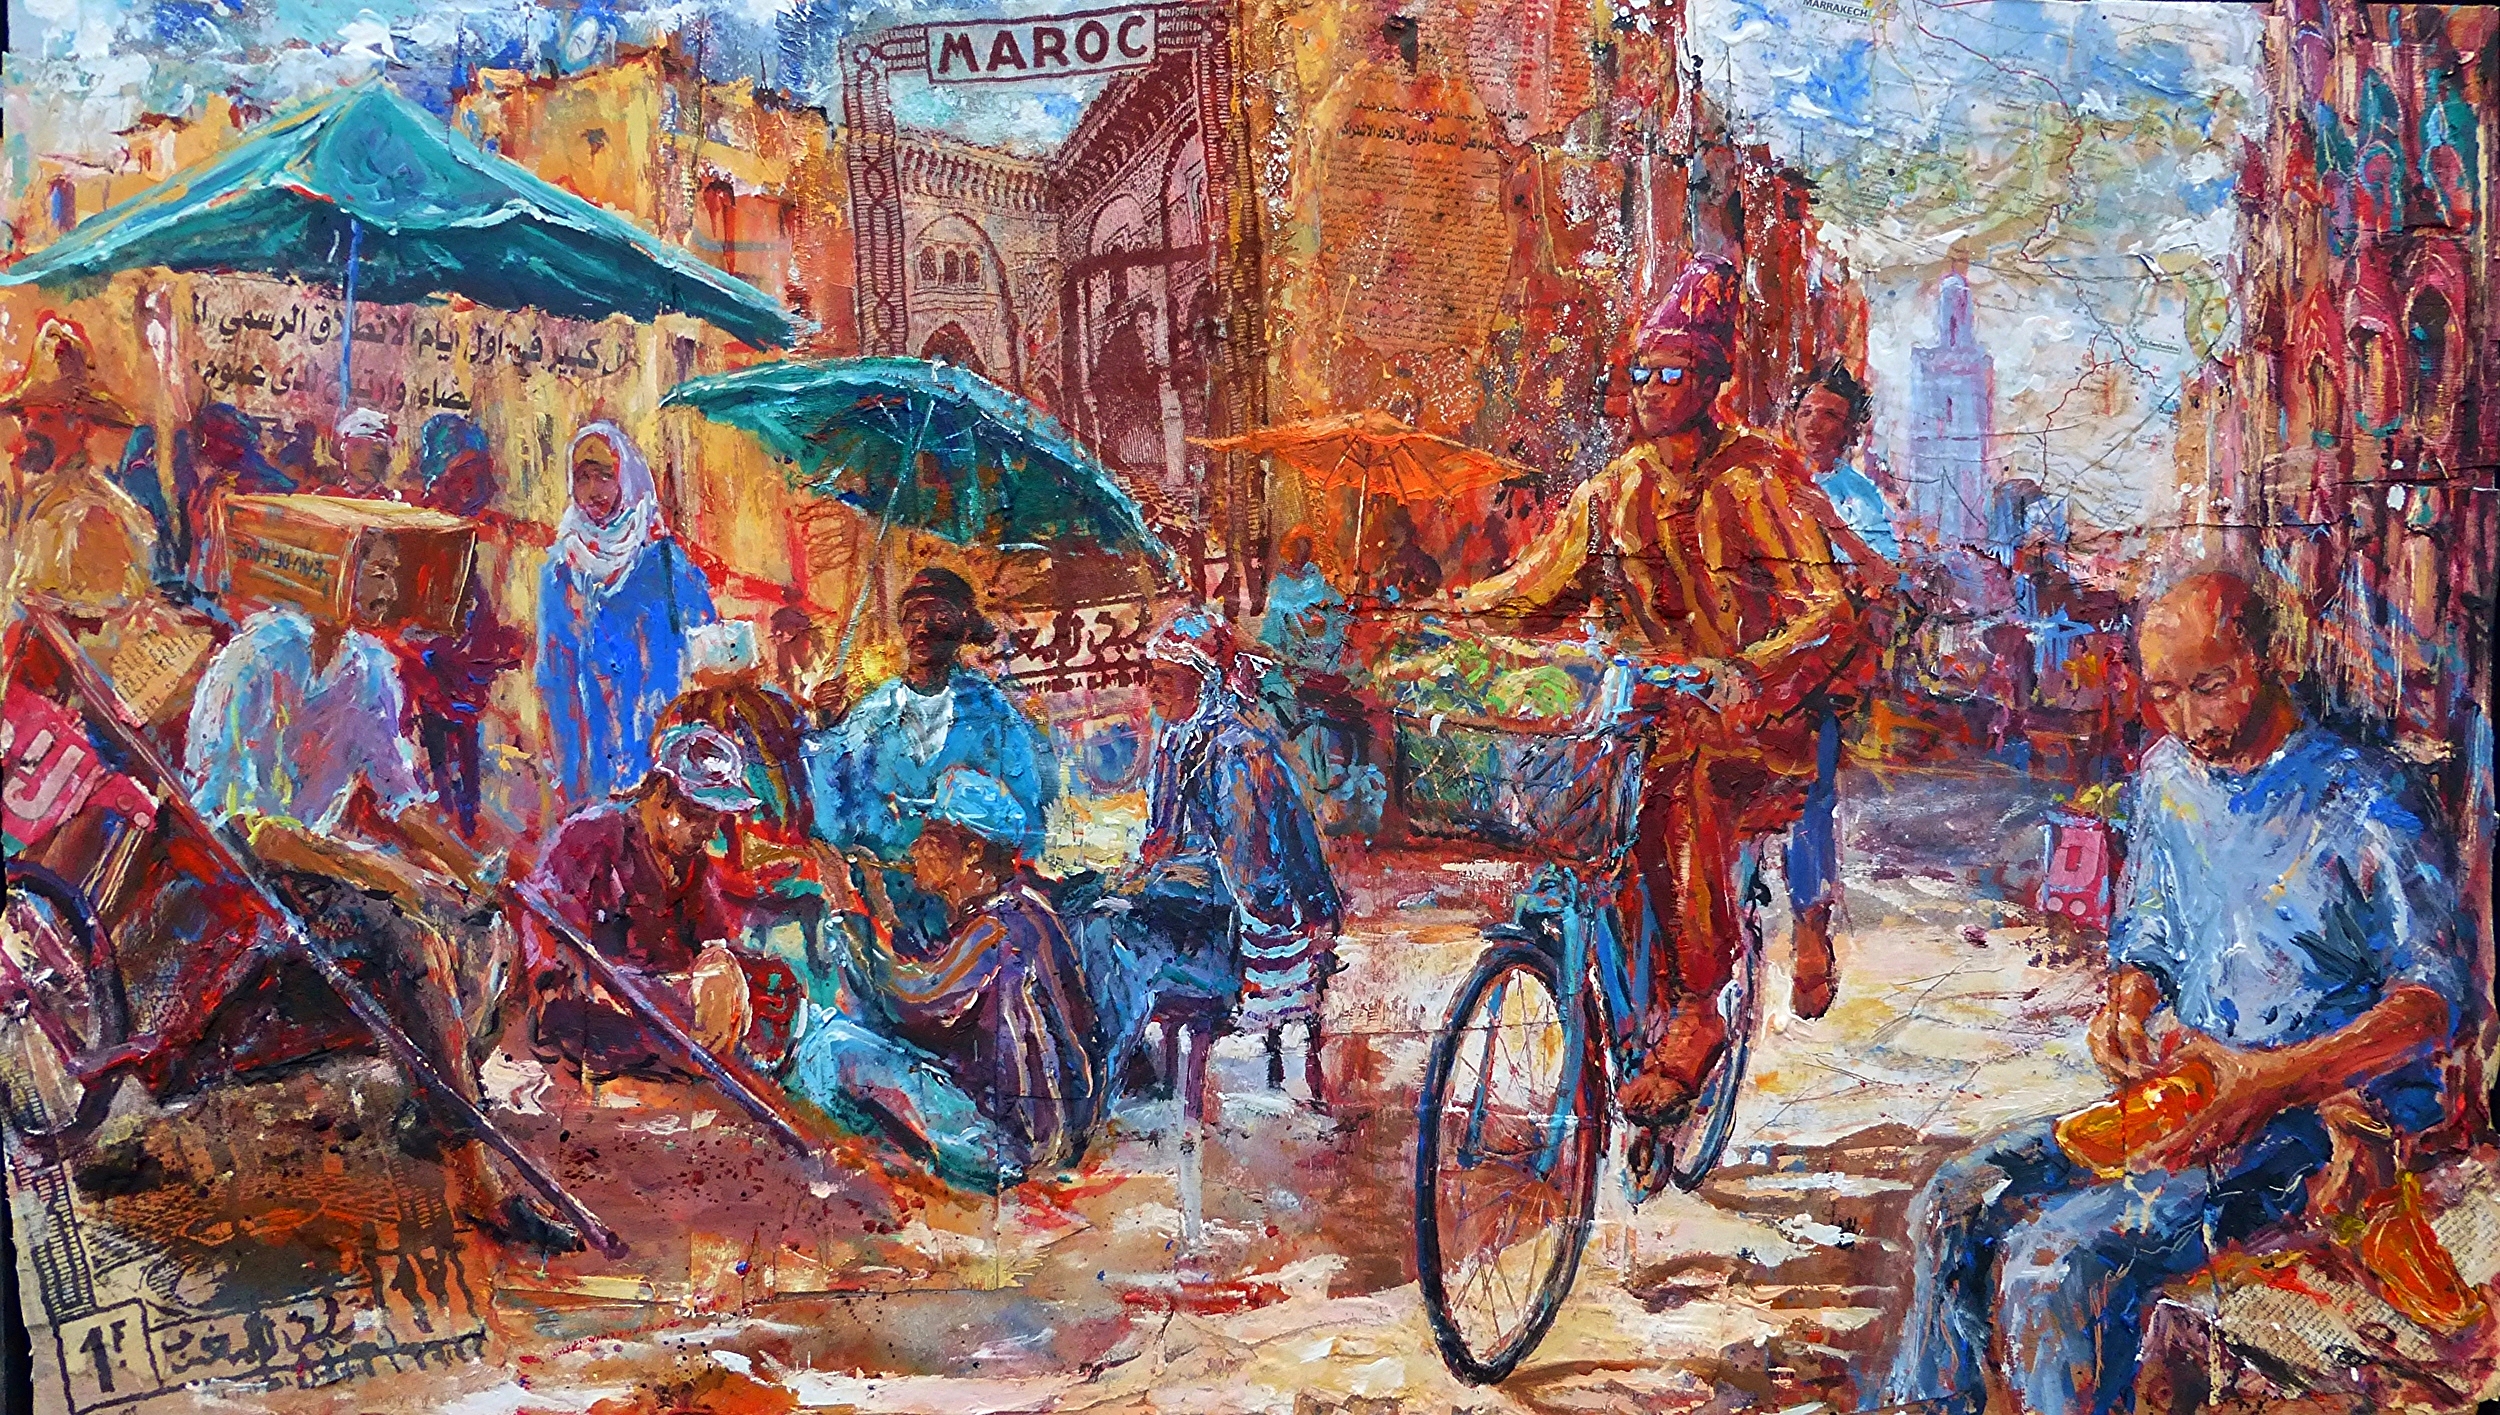 Maroc, Morocco, Acrylic, collage and photo silkscreen print on wood